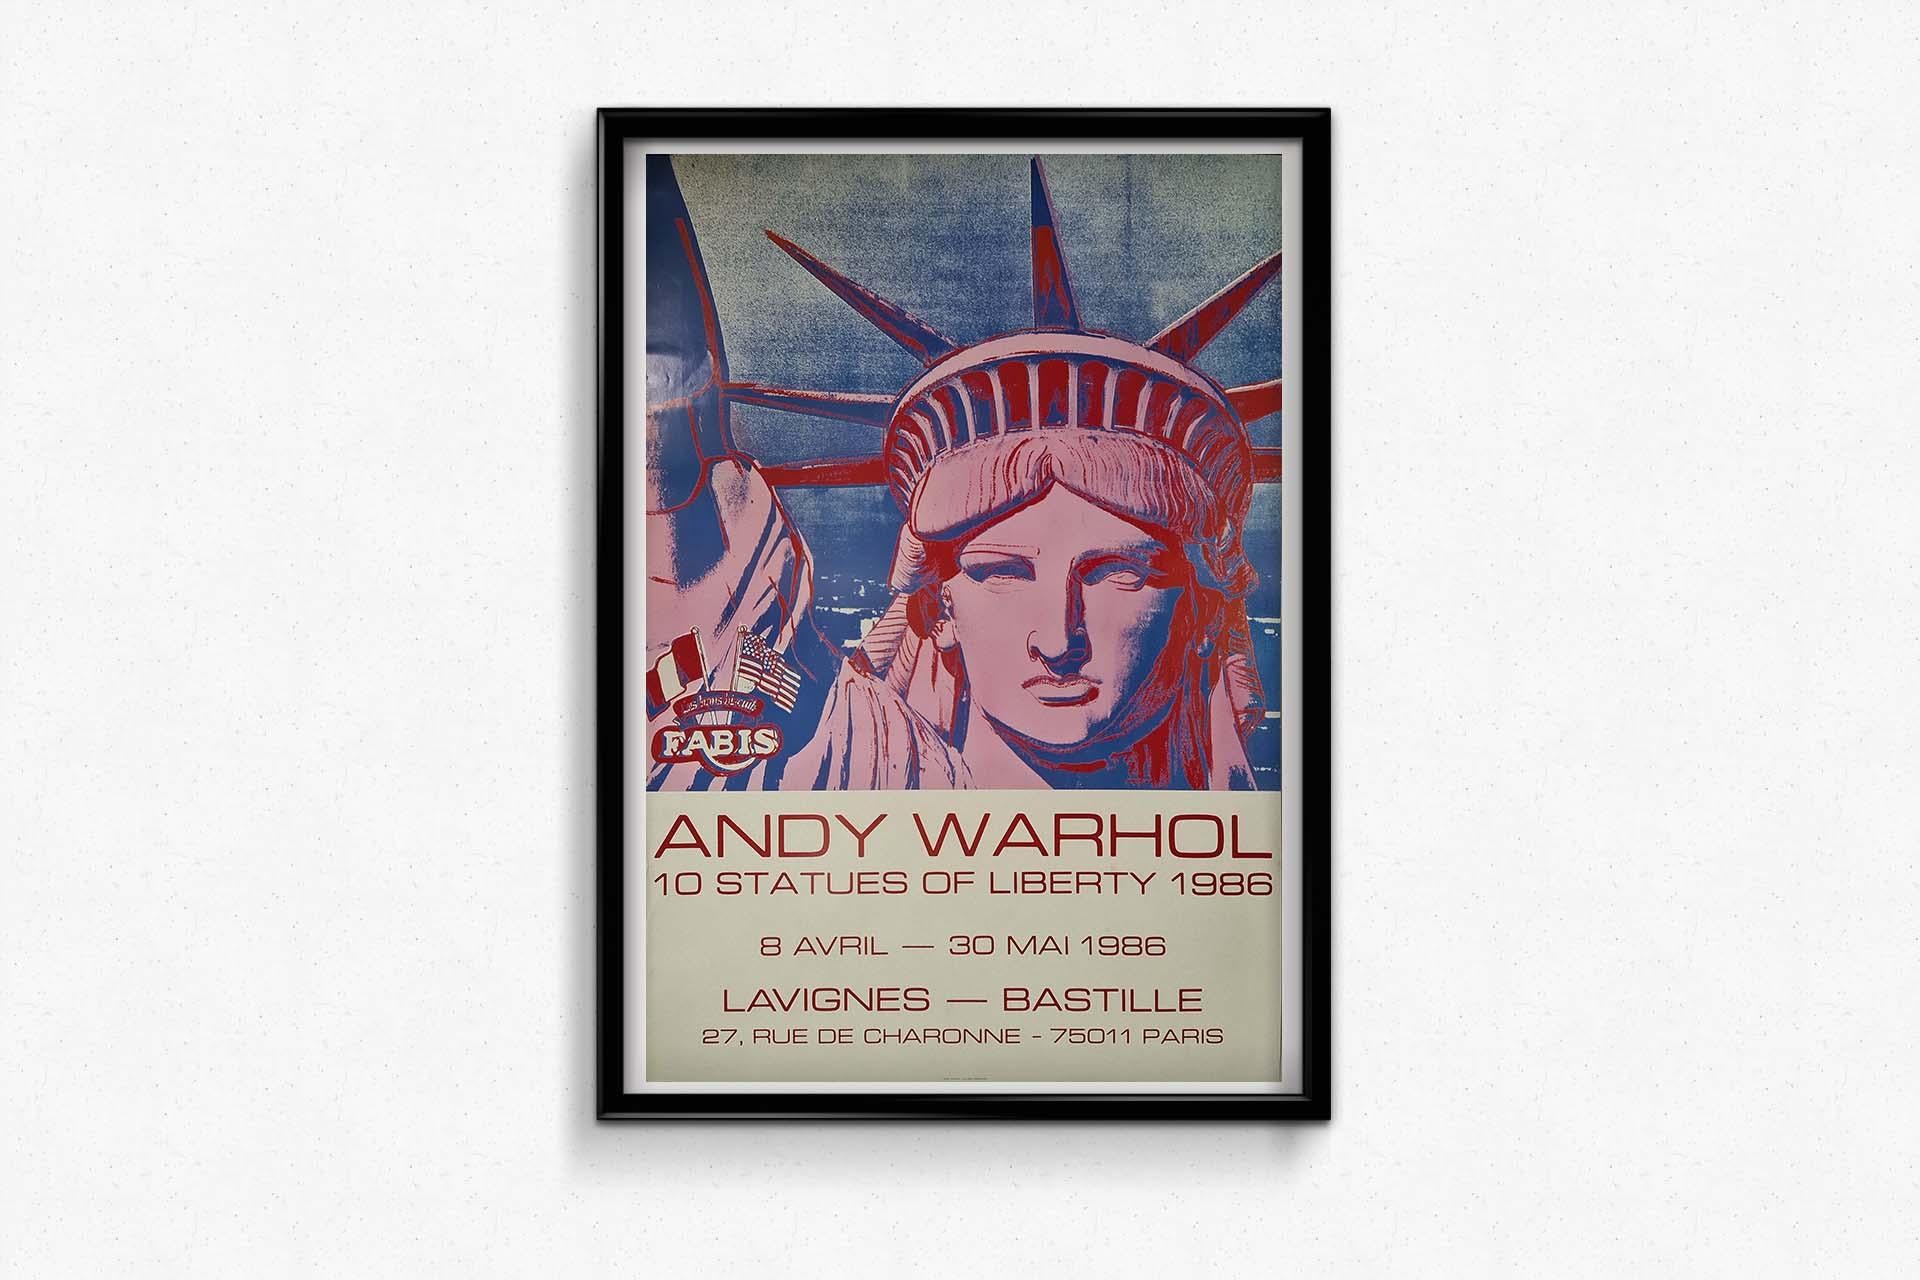 Andy Warhol's 1986 original exhibition poster 